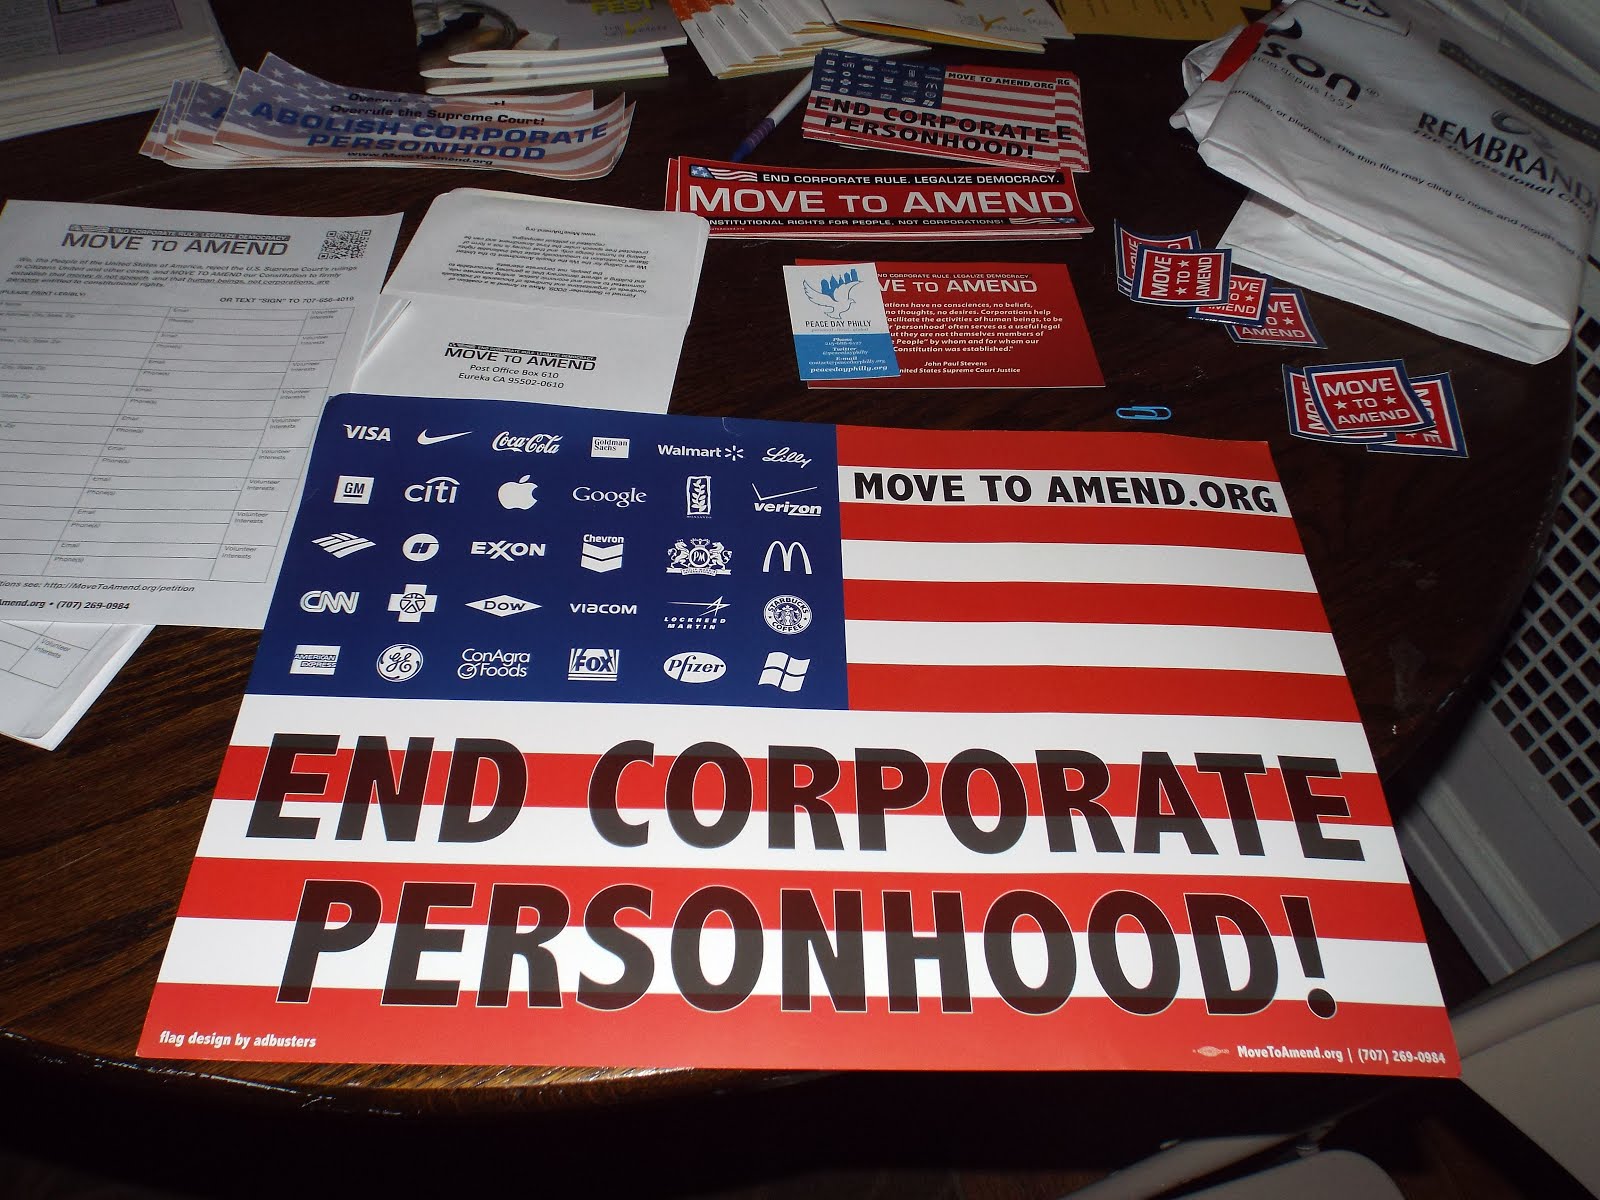 End Corporate PersonHood